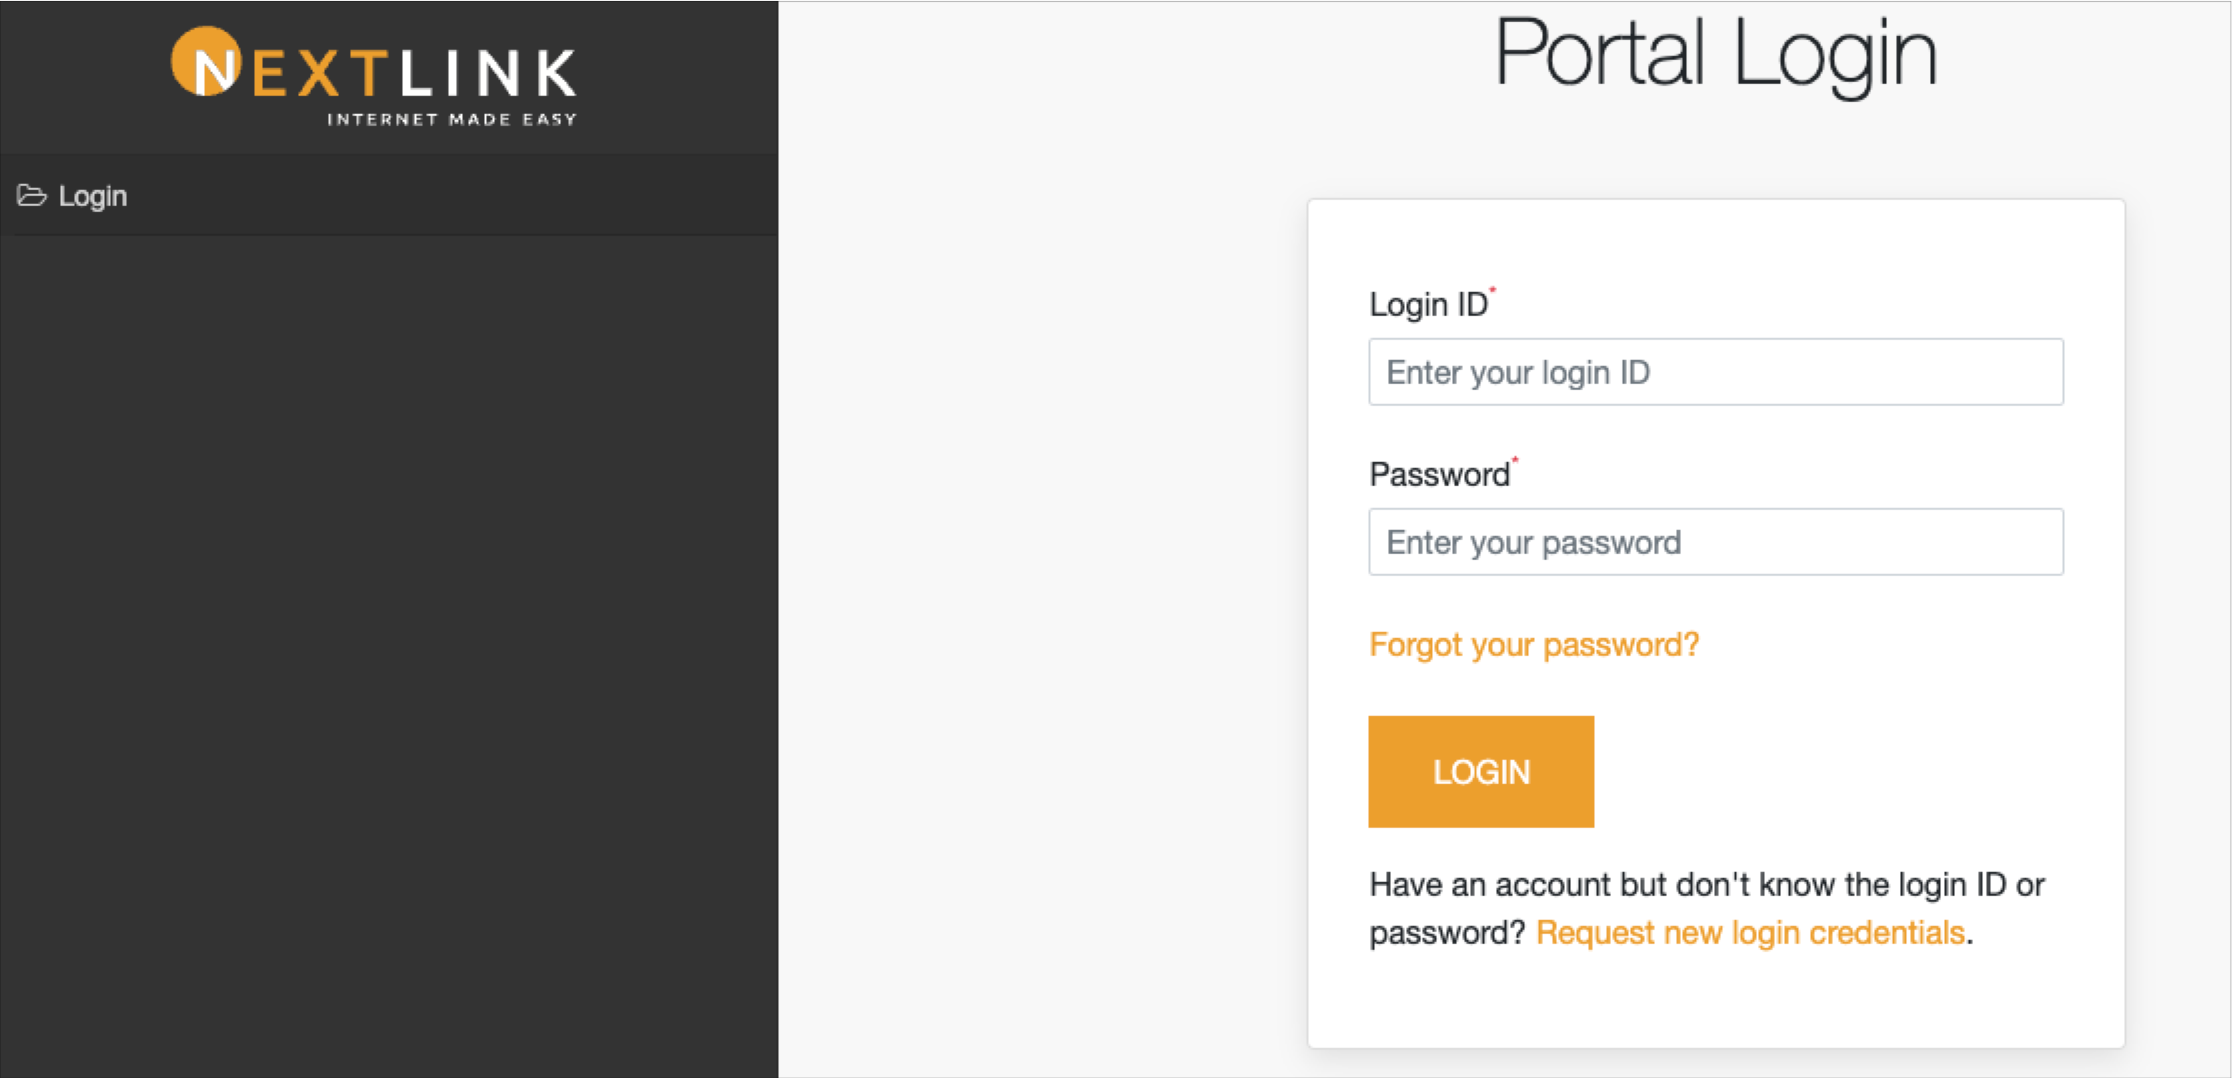 Nextlink portal login screen